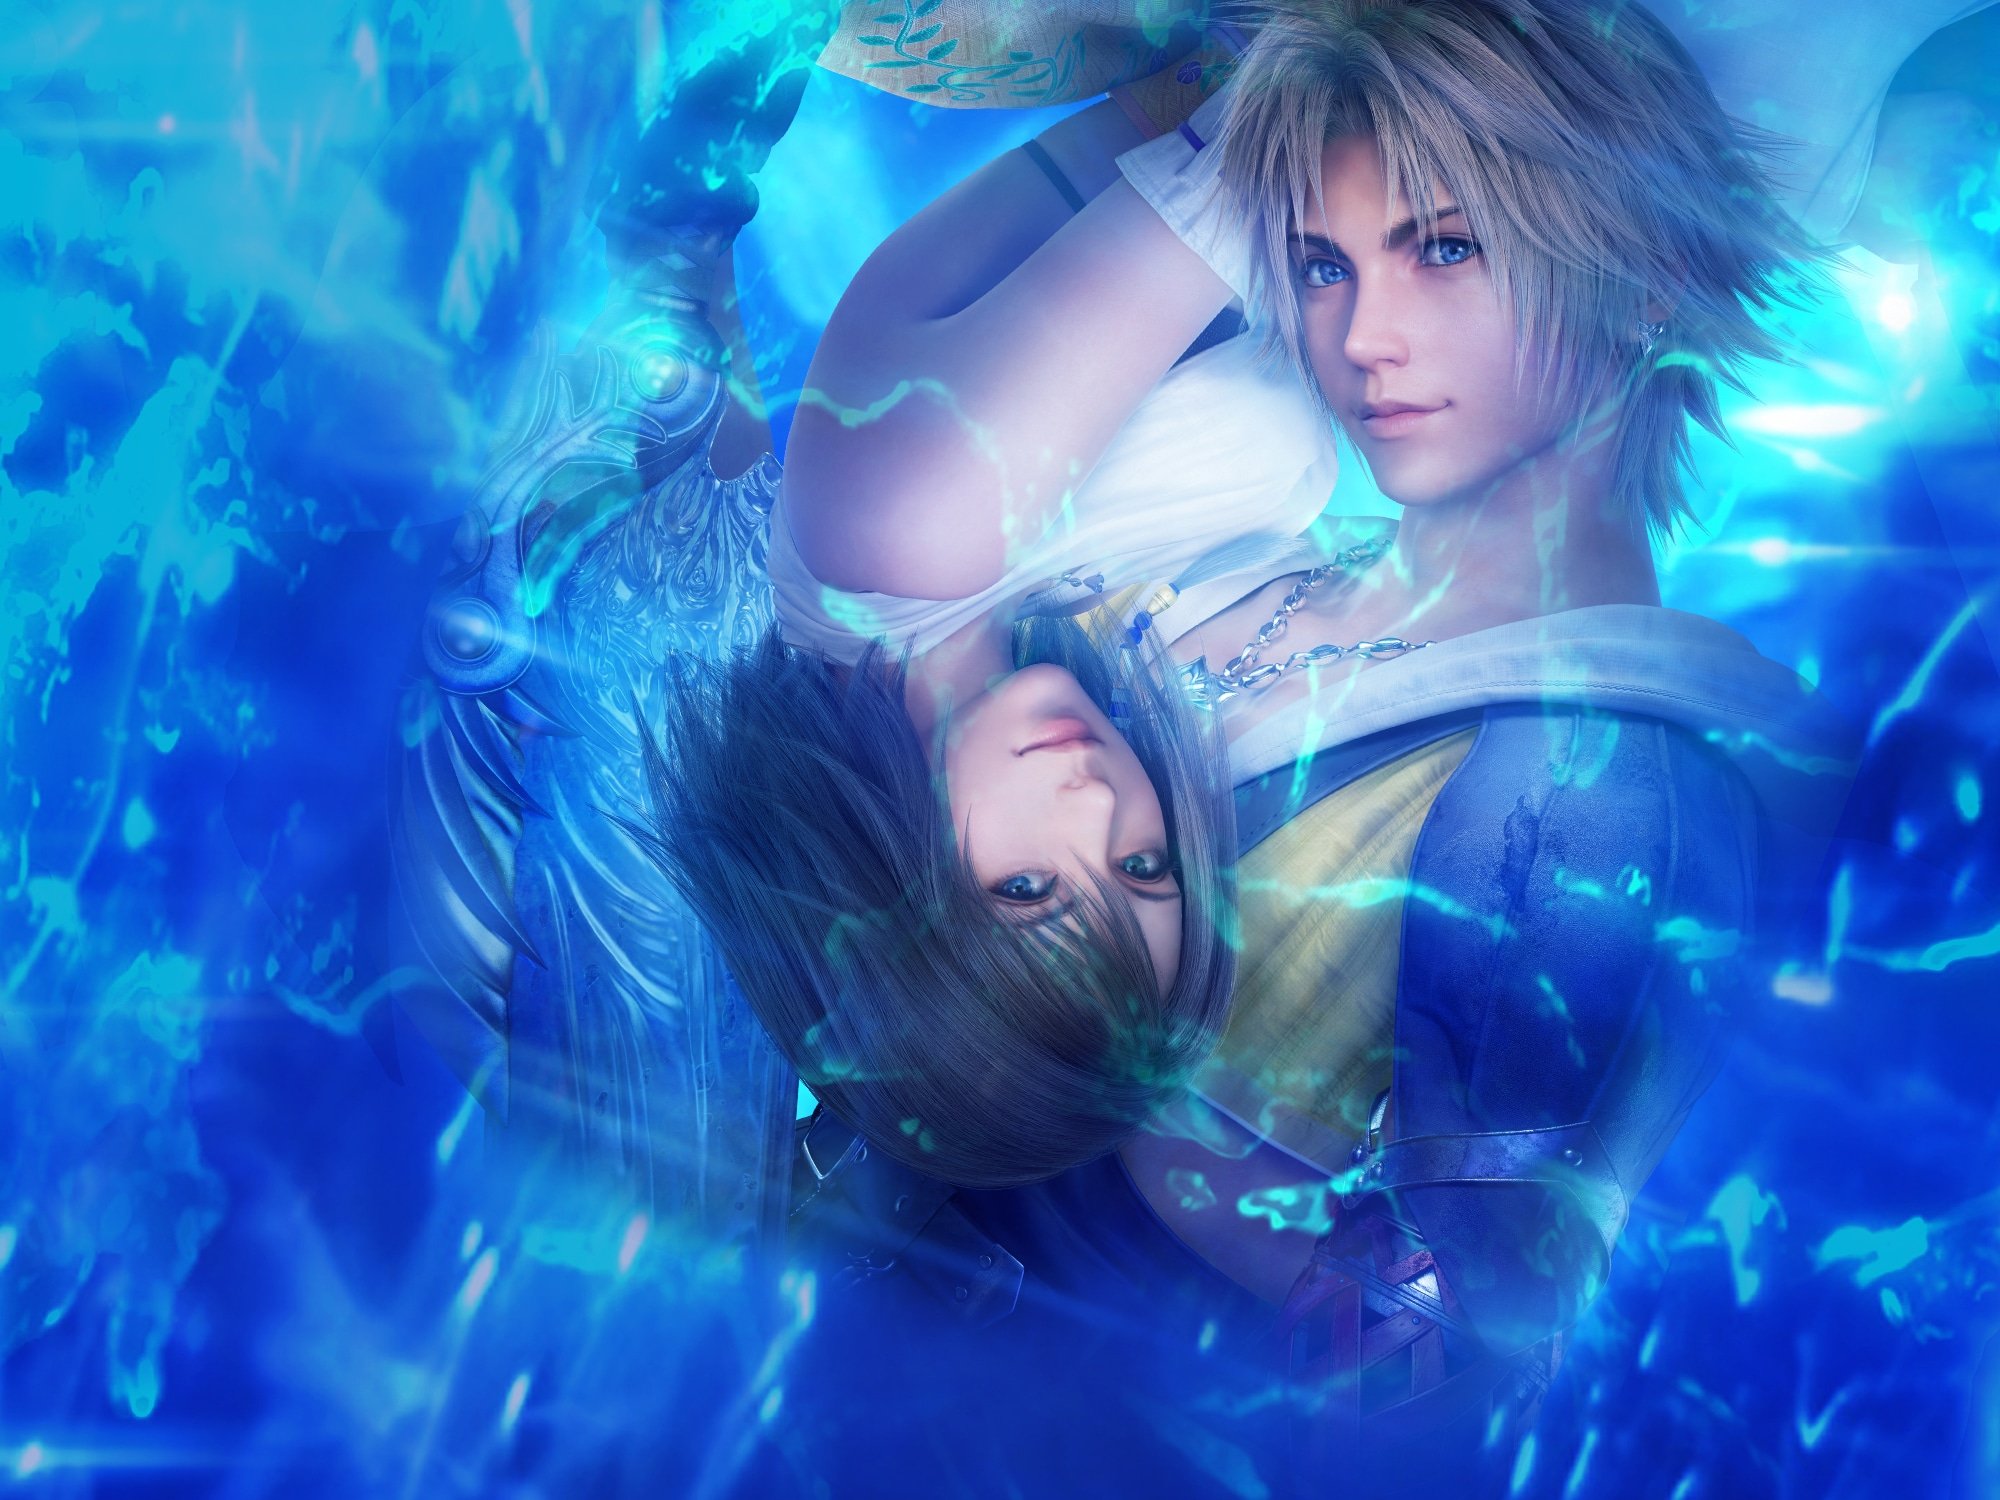 More information about "Final Fantasy X Retrospective"